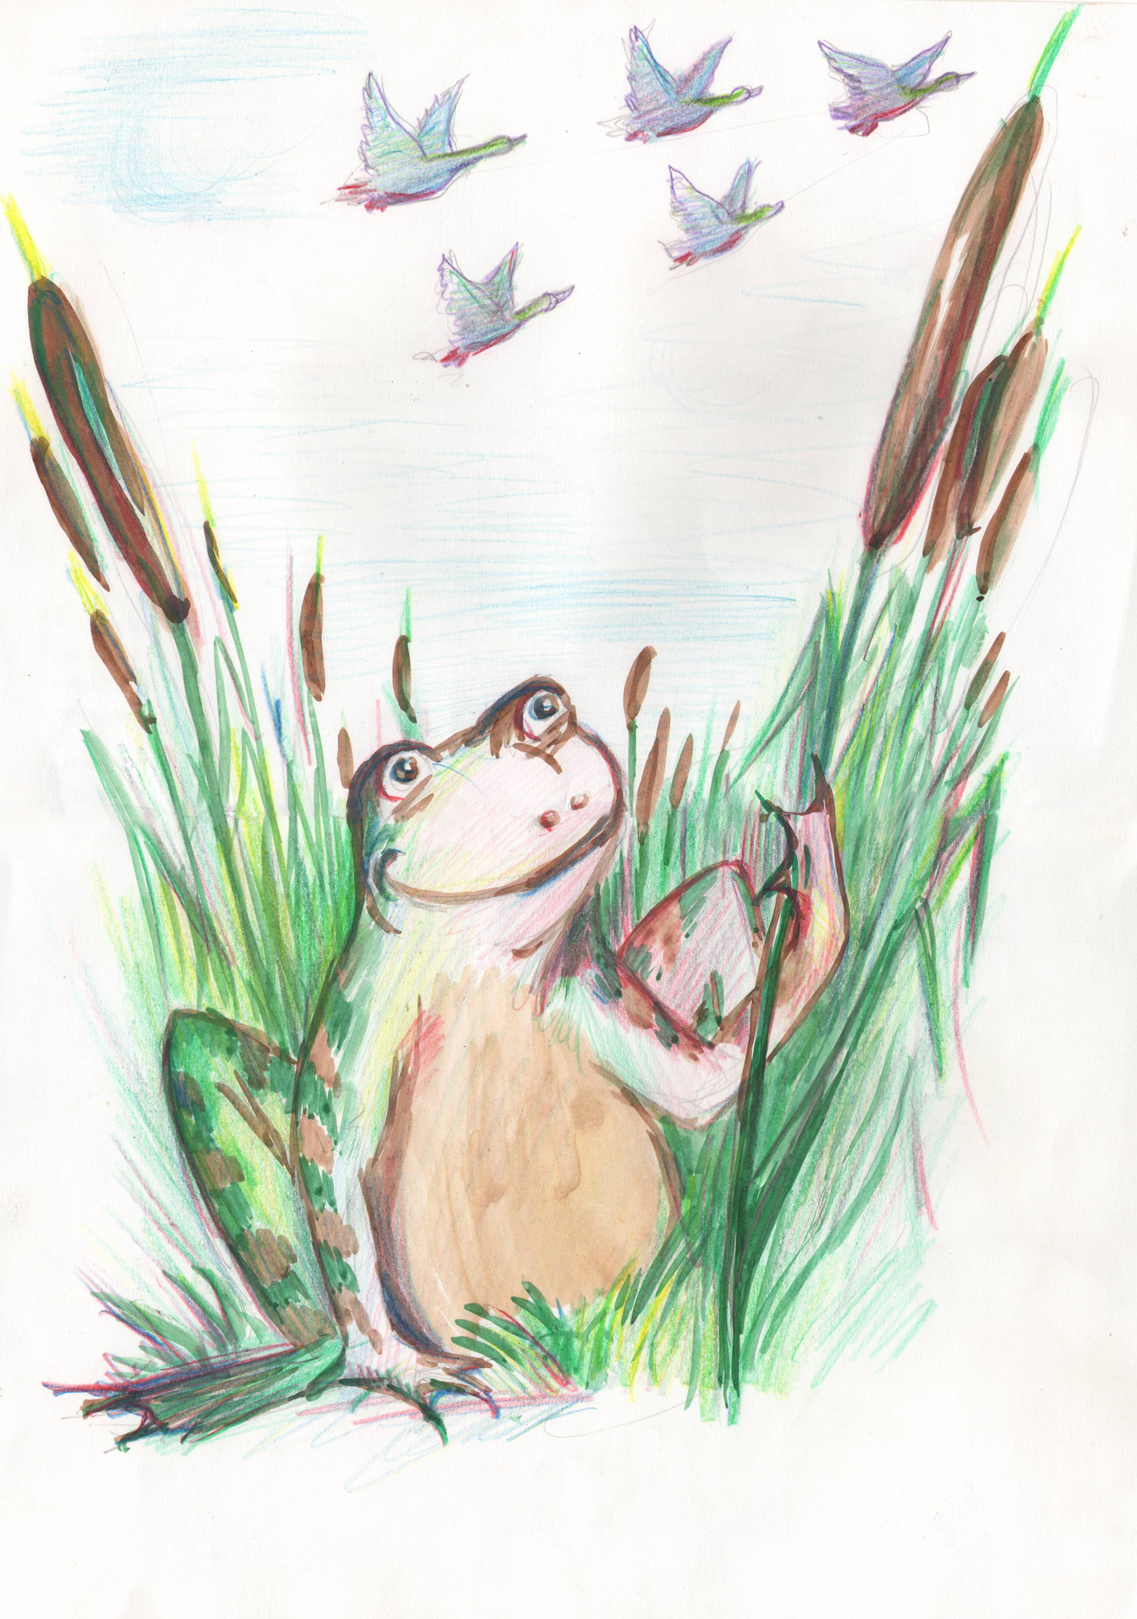 Рисунок к сказке лягушка путешественница